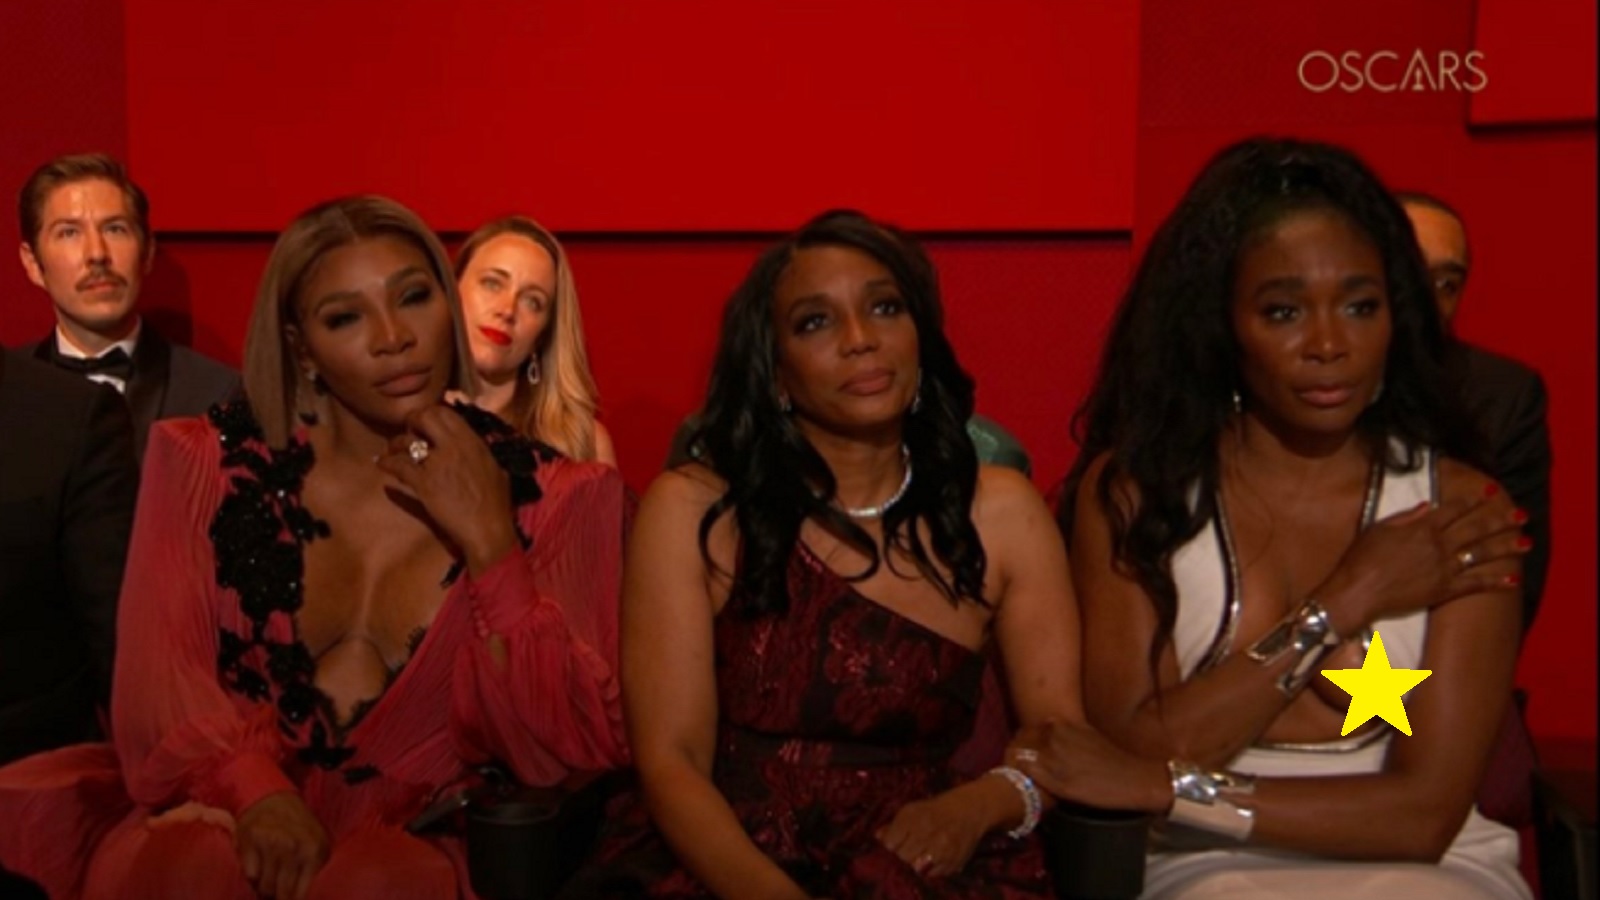 Venus Williams has nip slip wardrobe malfunction at Oscars